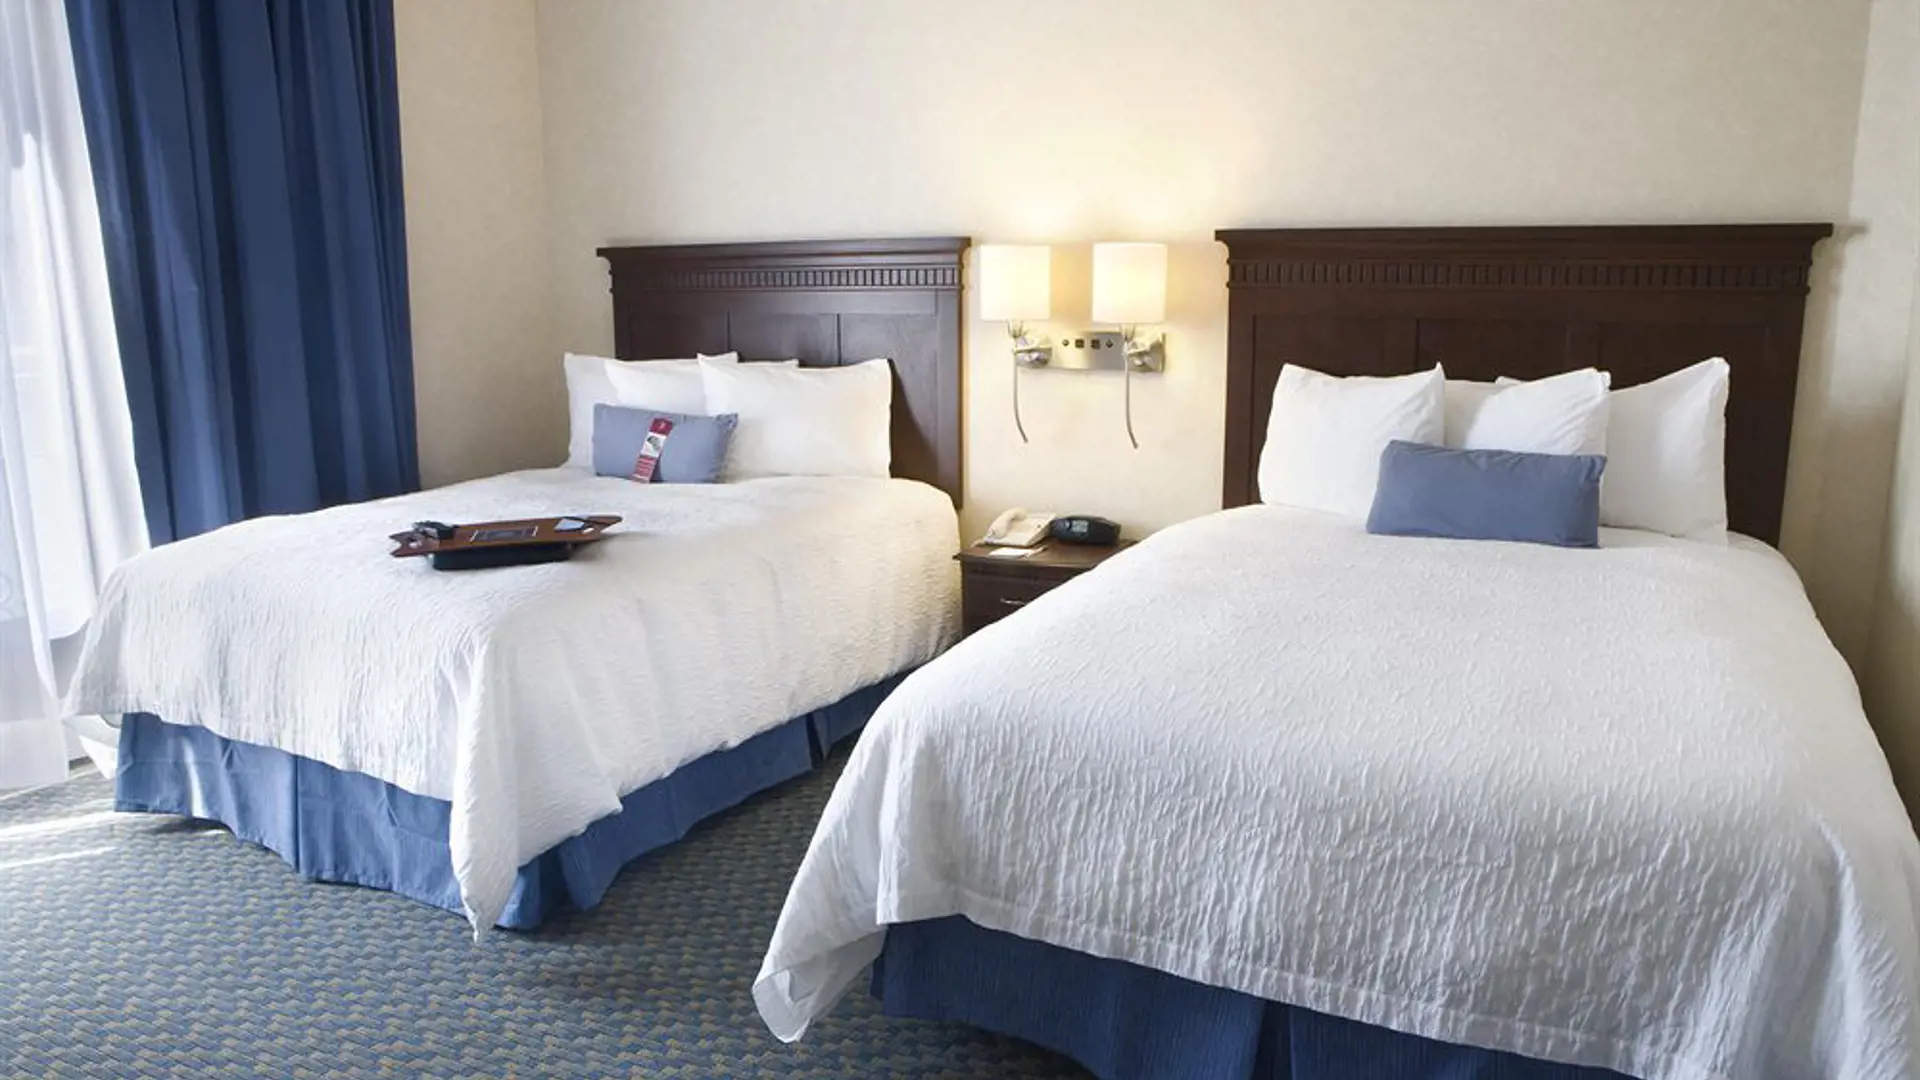 Hamptonn Inn & Suites Mex City - 2 DBL beds.jpg